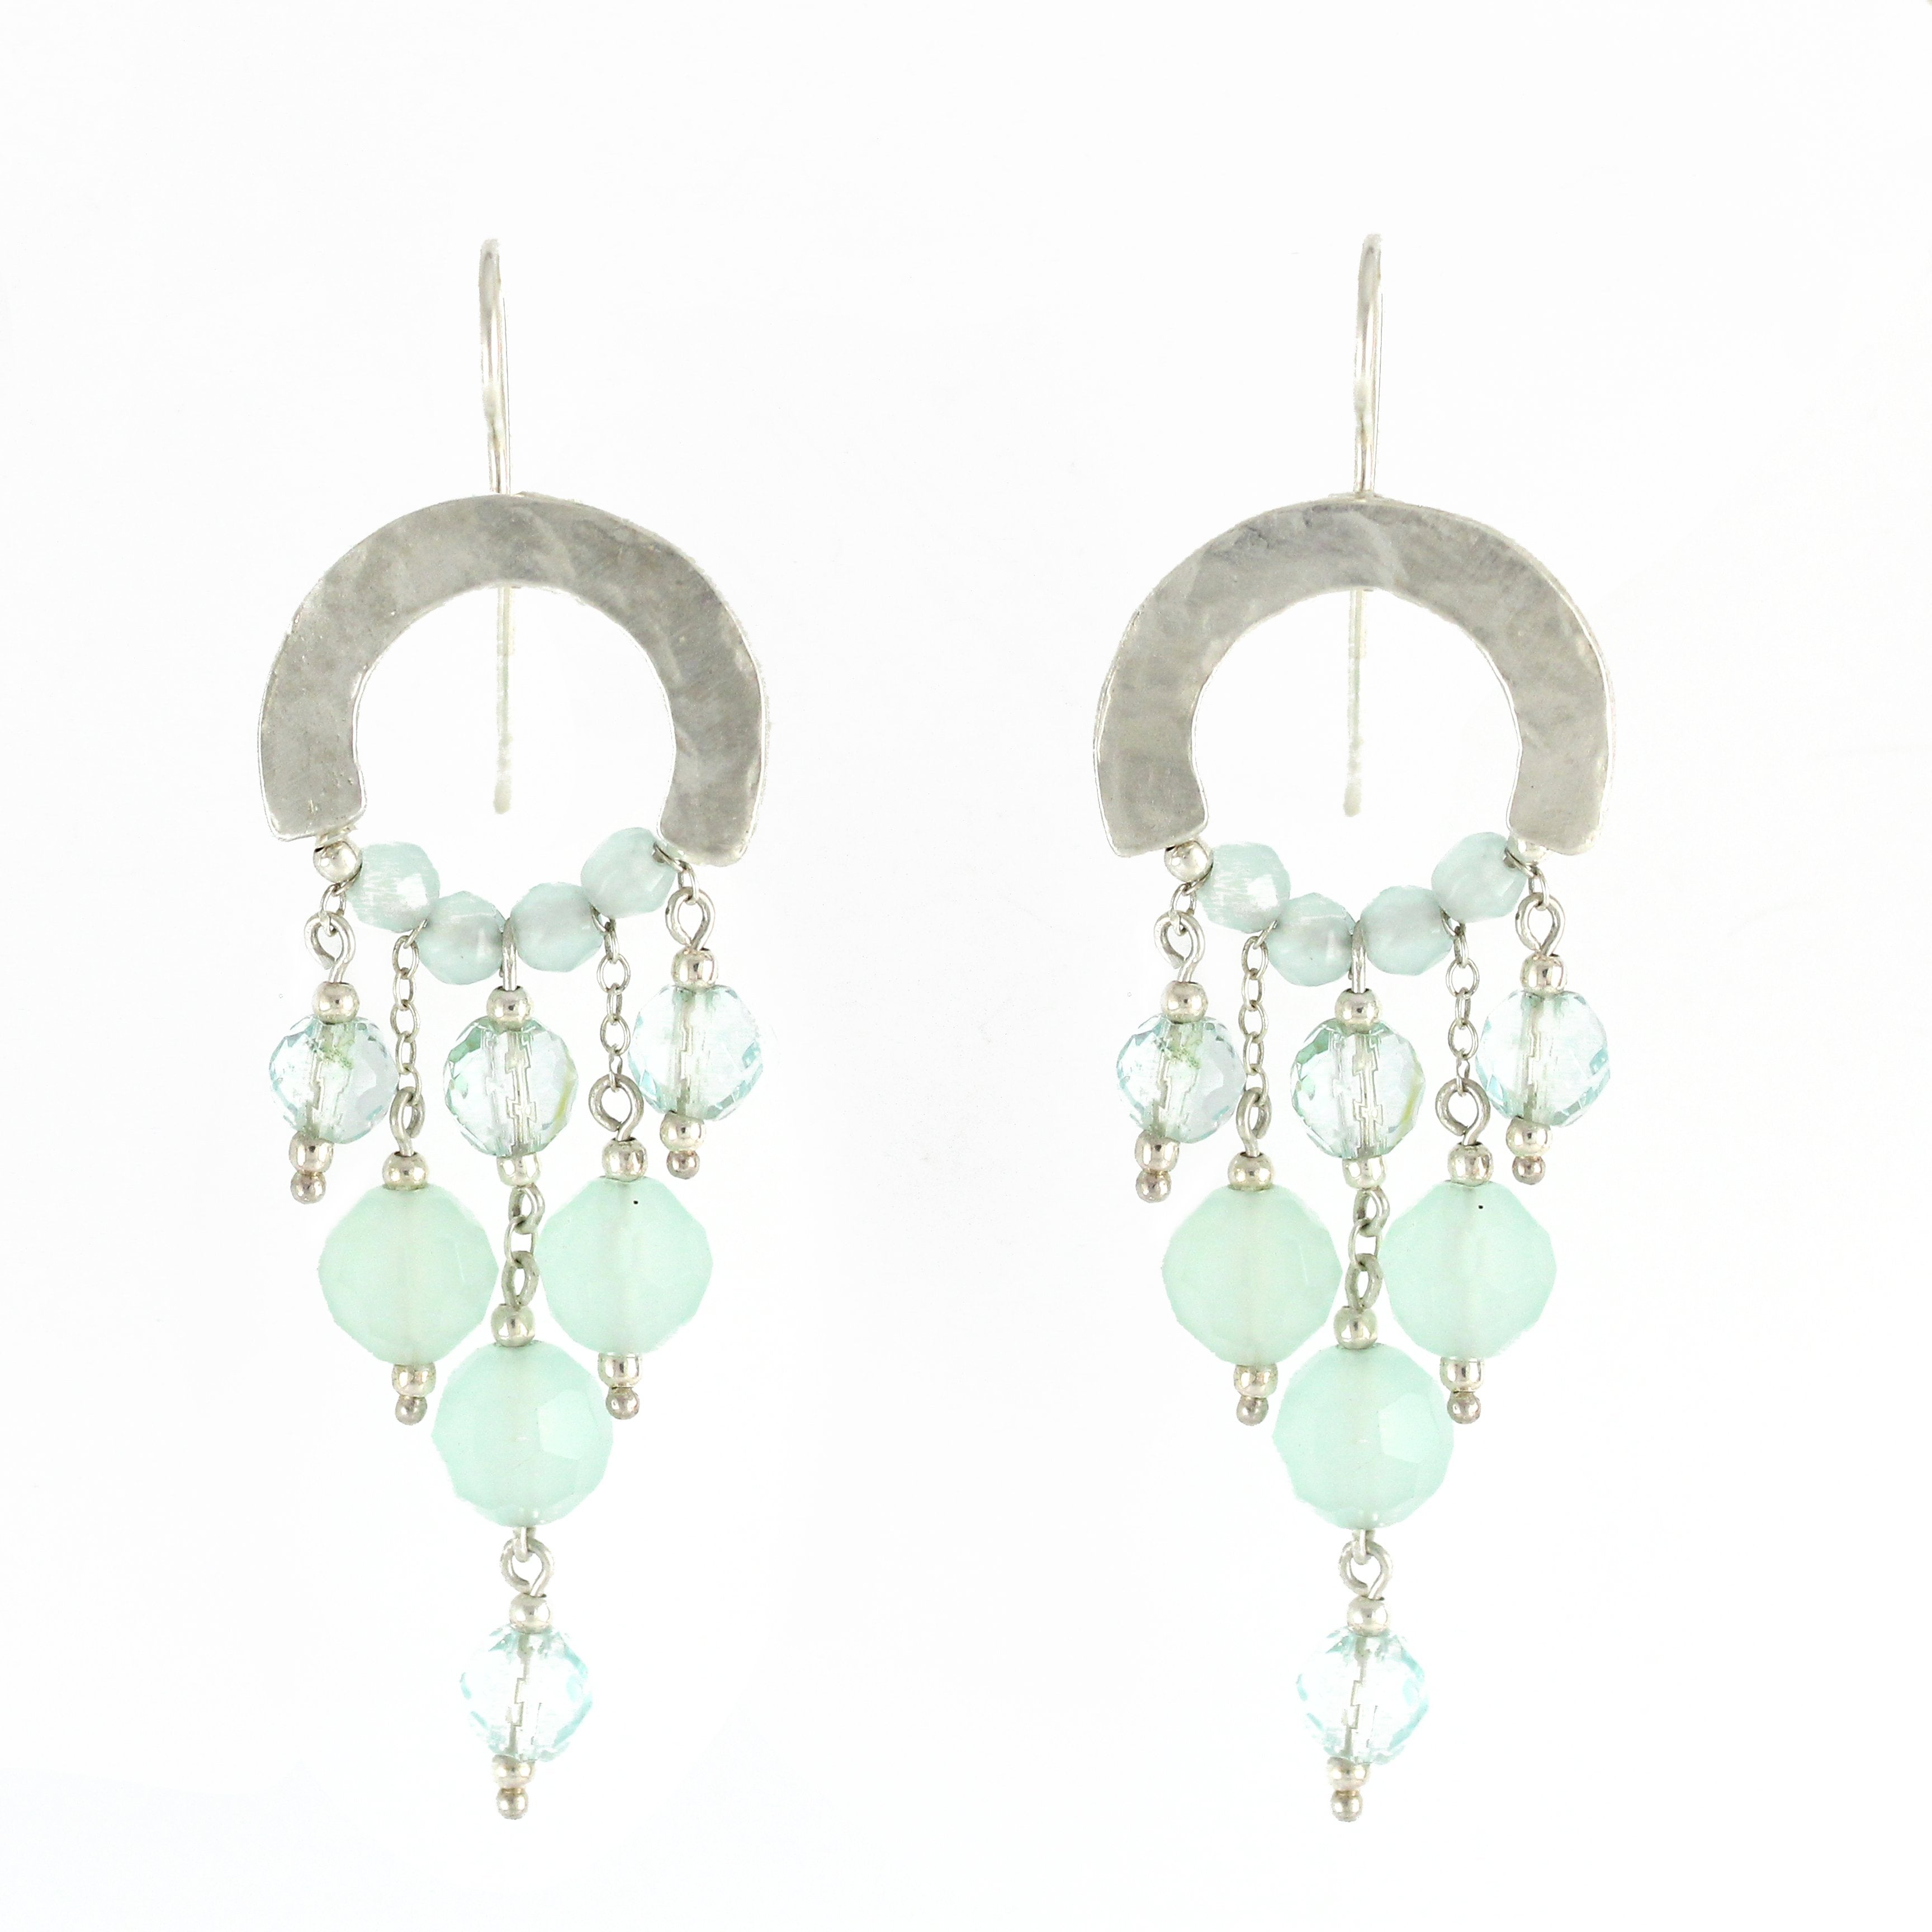 Elegant Bohemian Style Silver & Quartz Gemstones Large Earrings - Shulamit Kanter